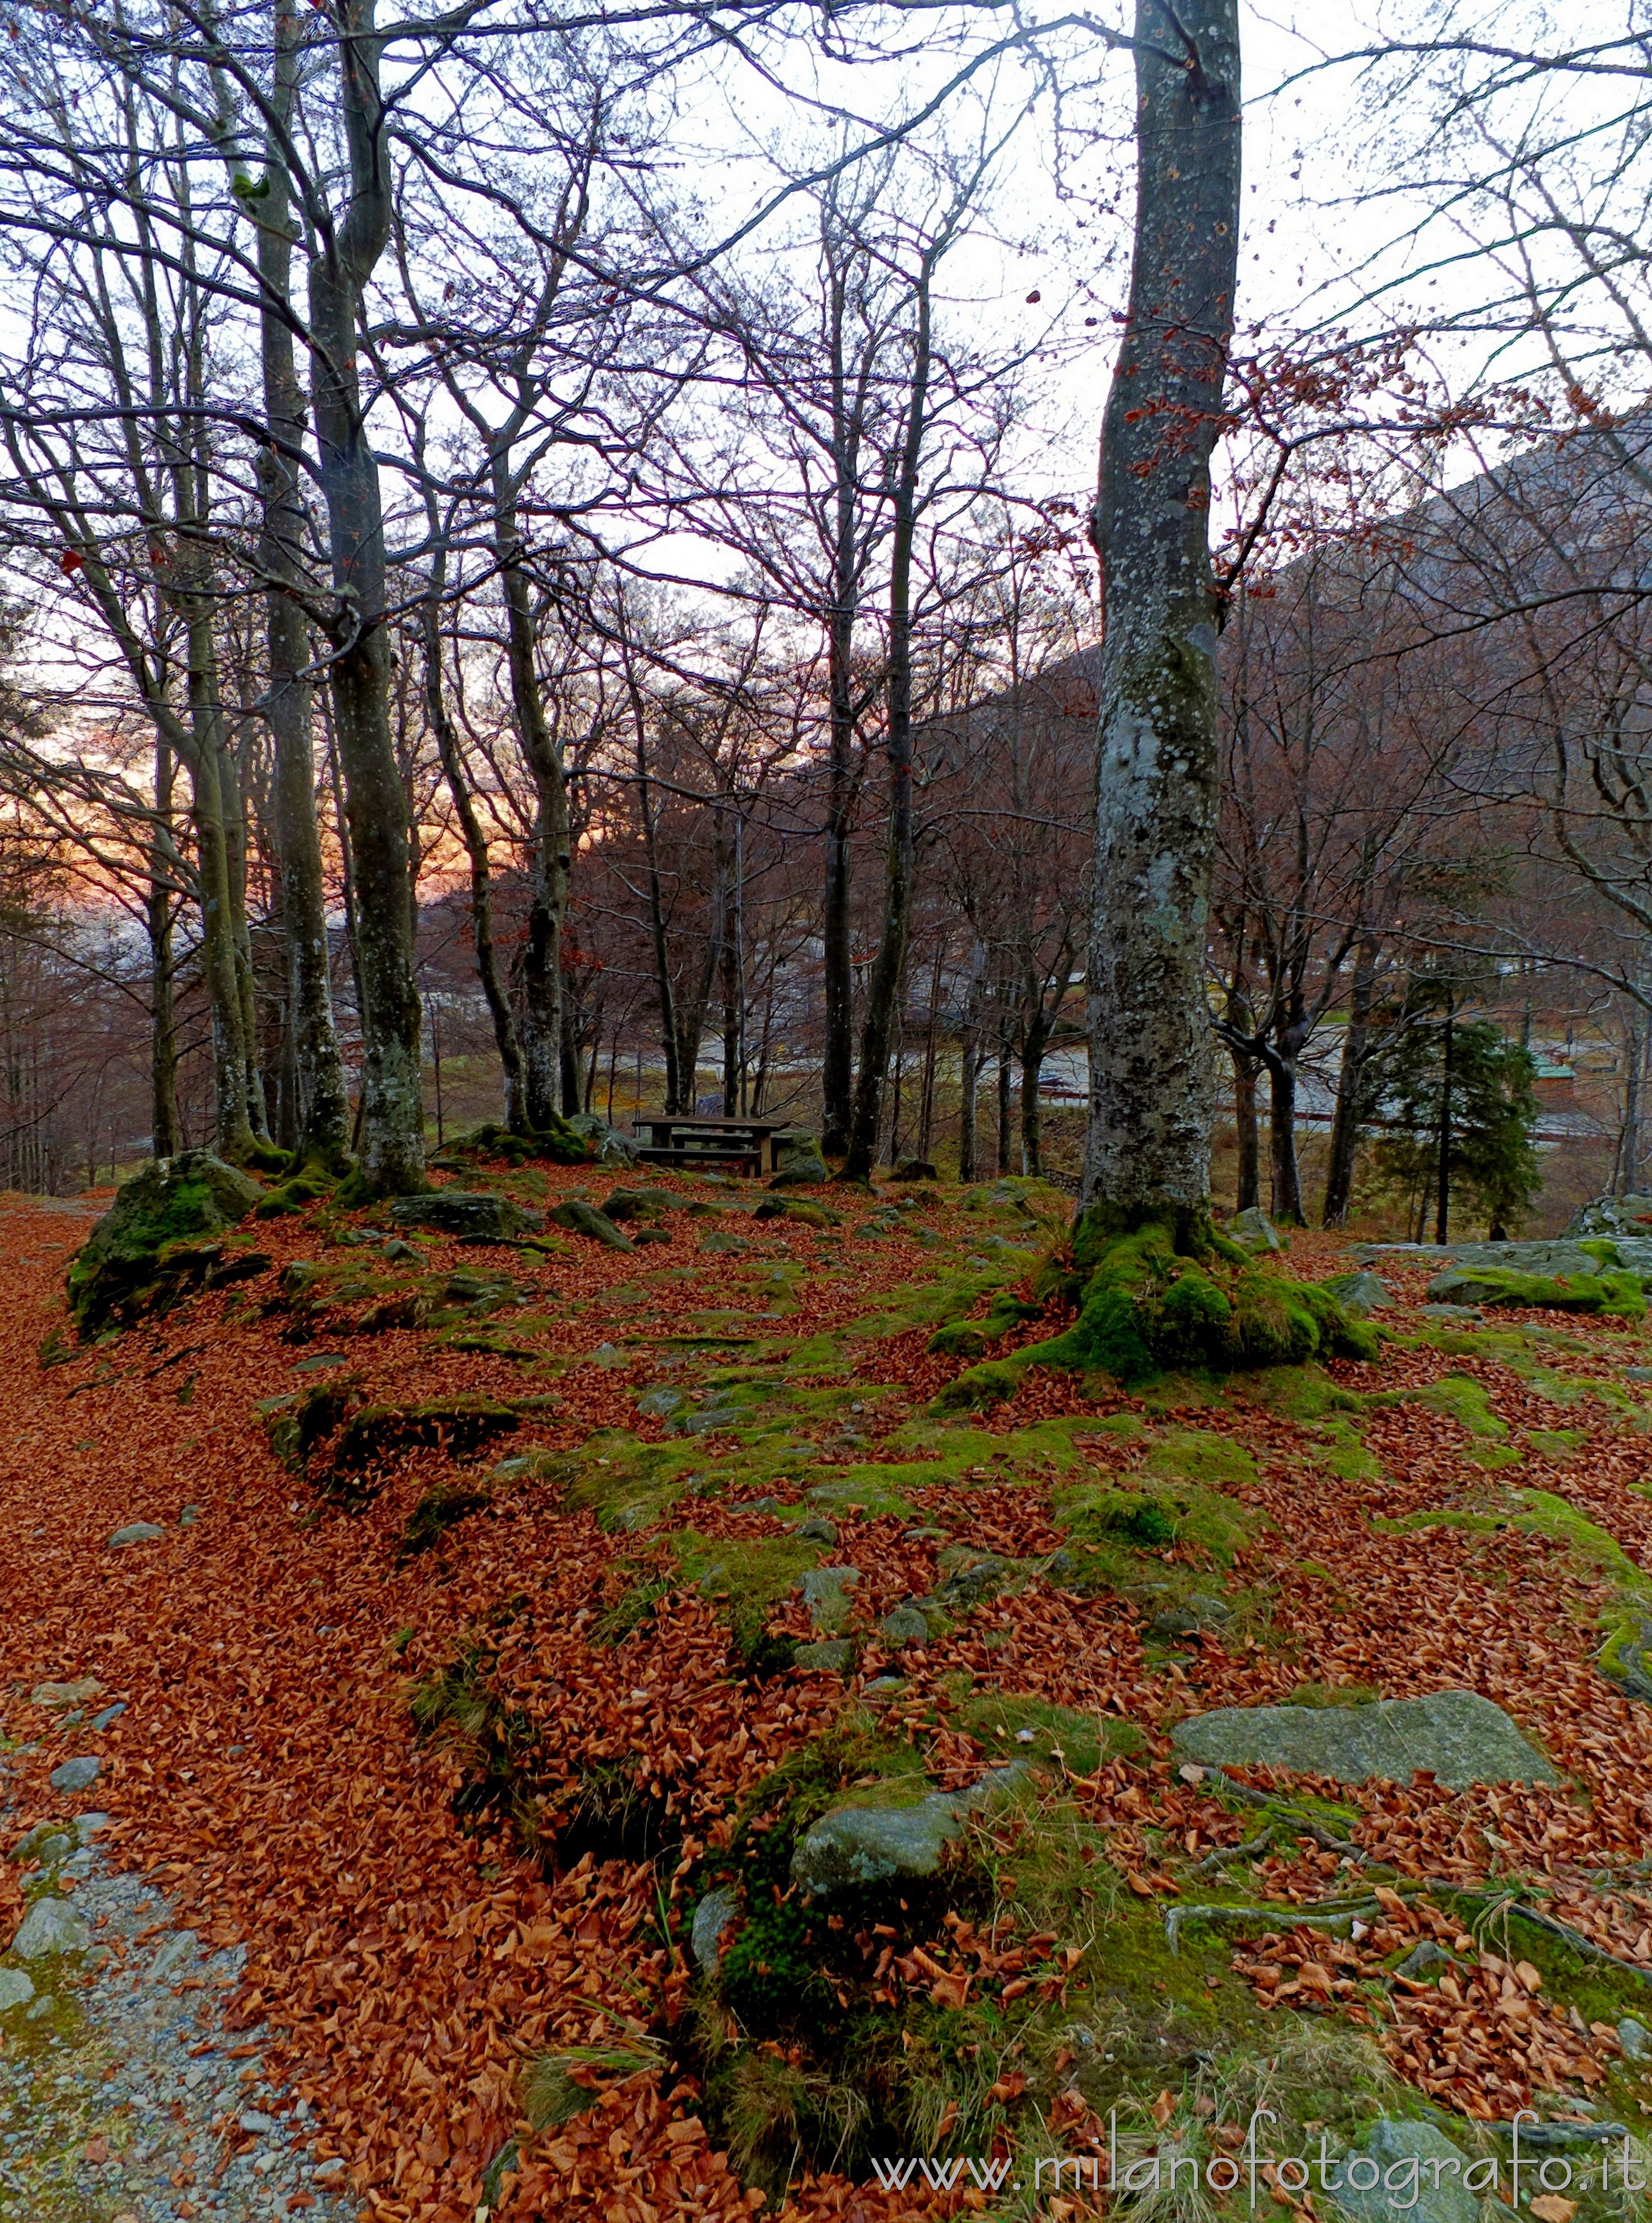 Biella (Italy): Autumn darkening in the woods around the Sanctuary of Oropa - Biella (Italy)